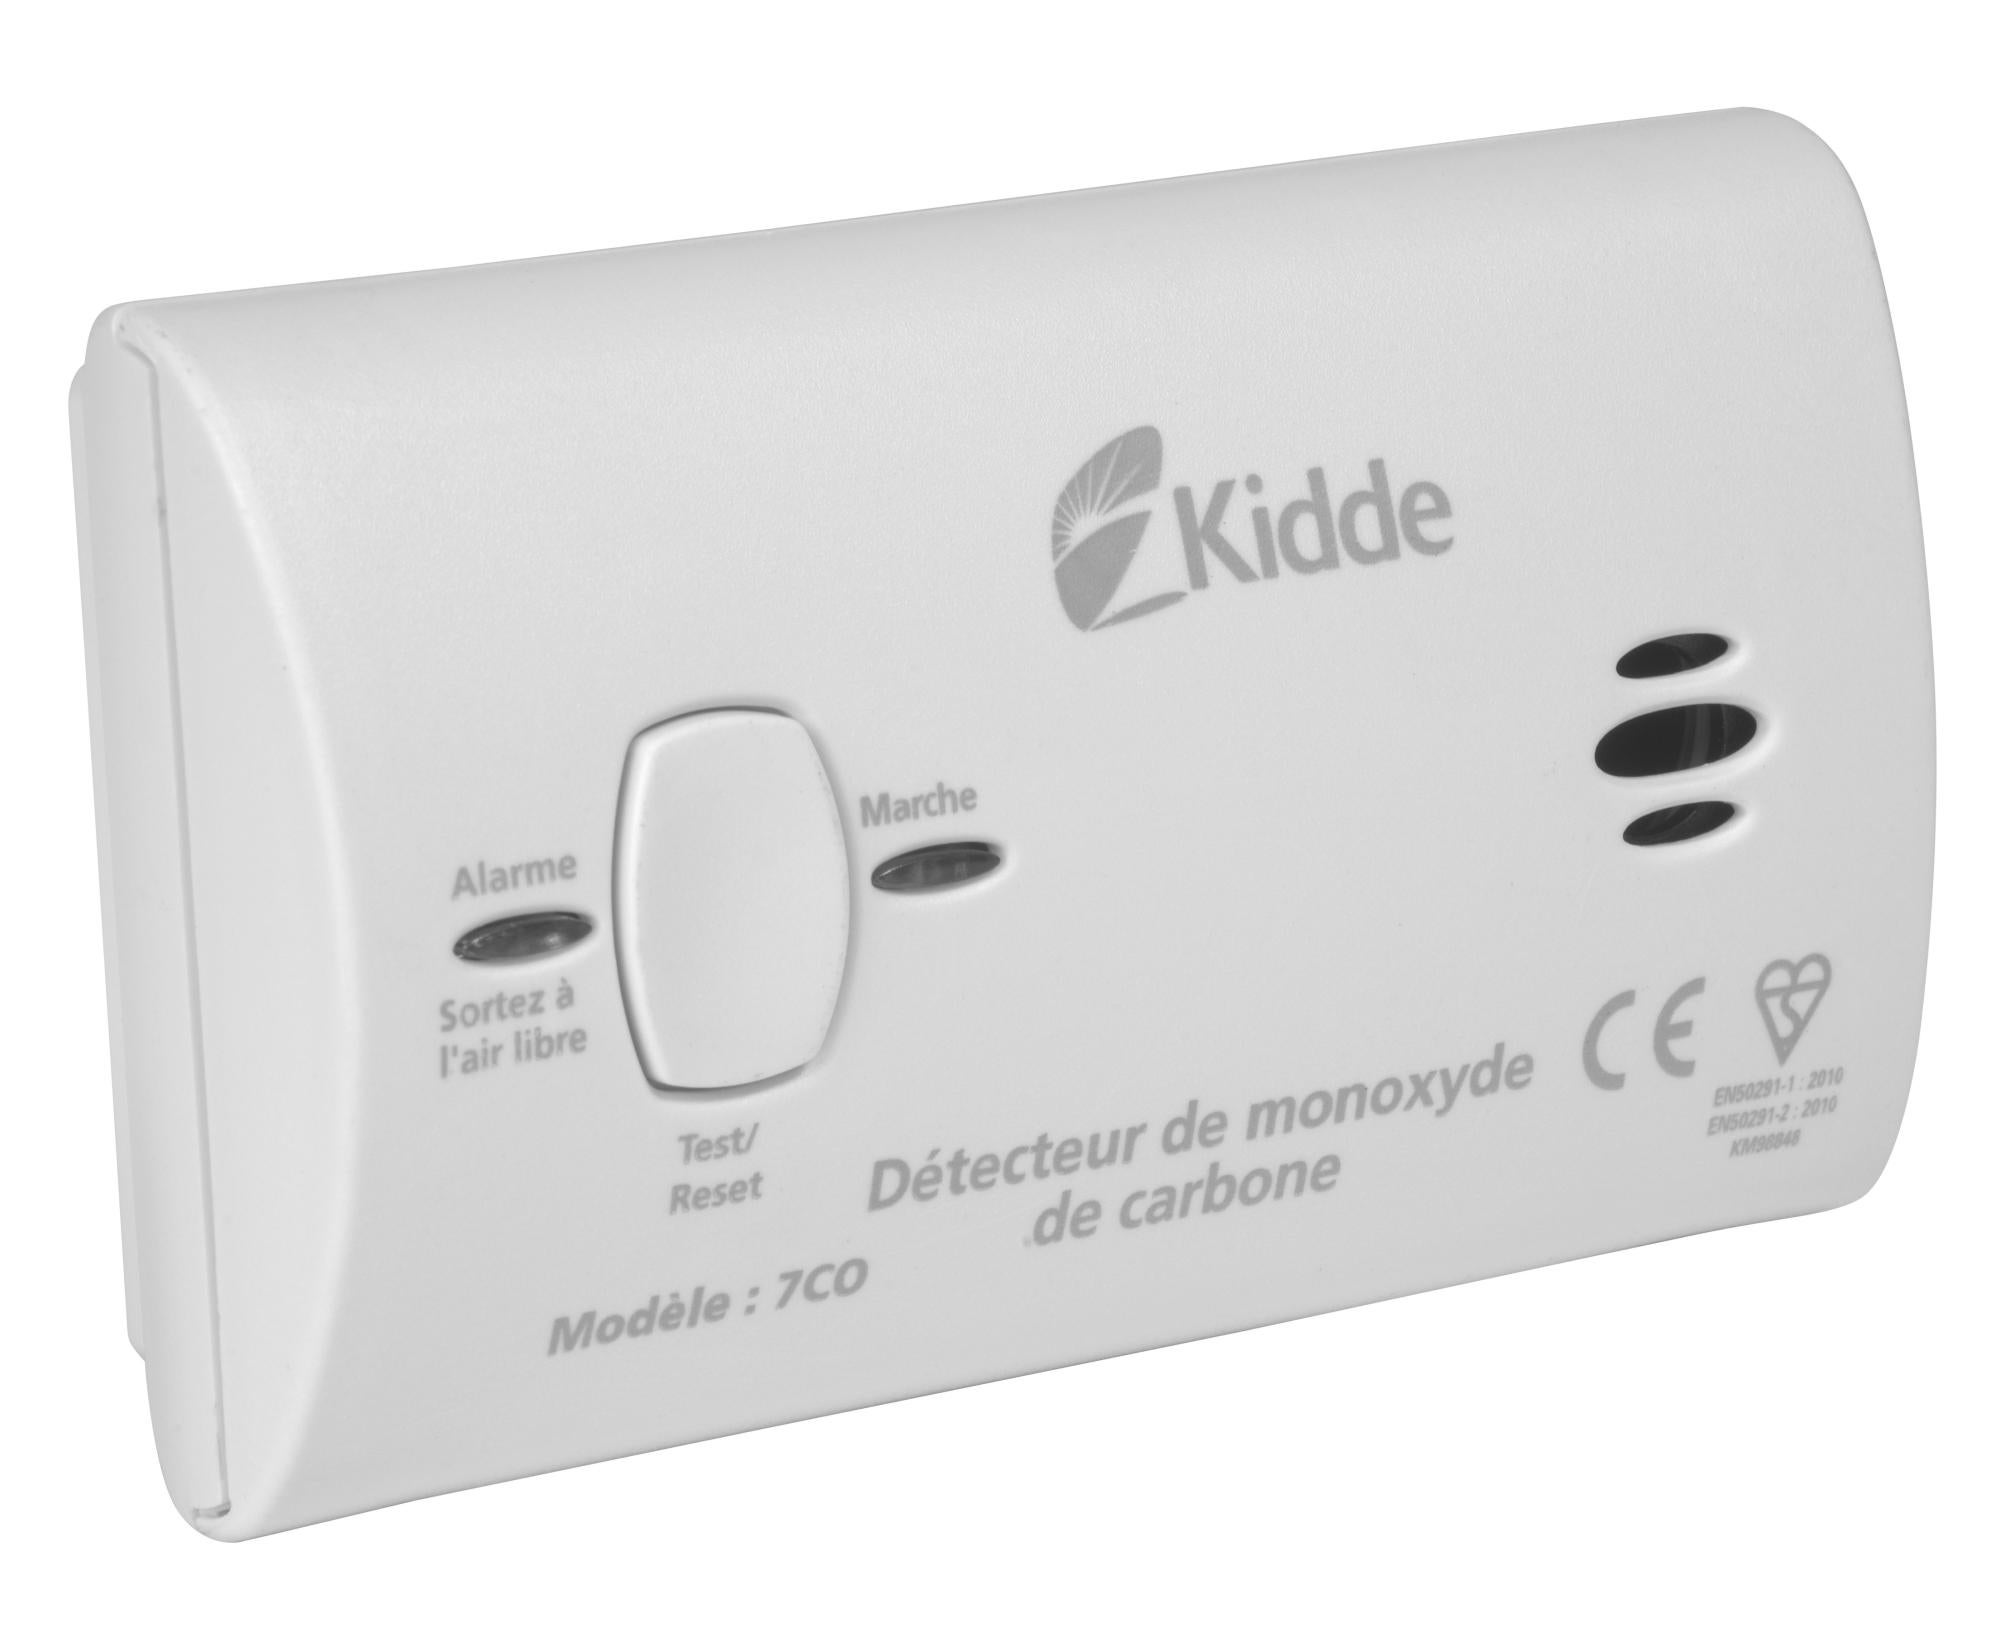 Détecteur de monoxyde de carbone Kidde 900-0146